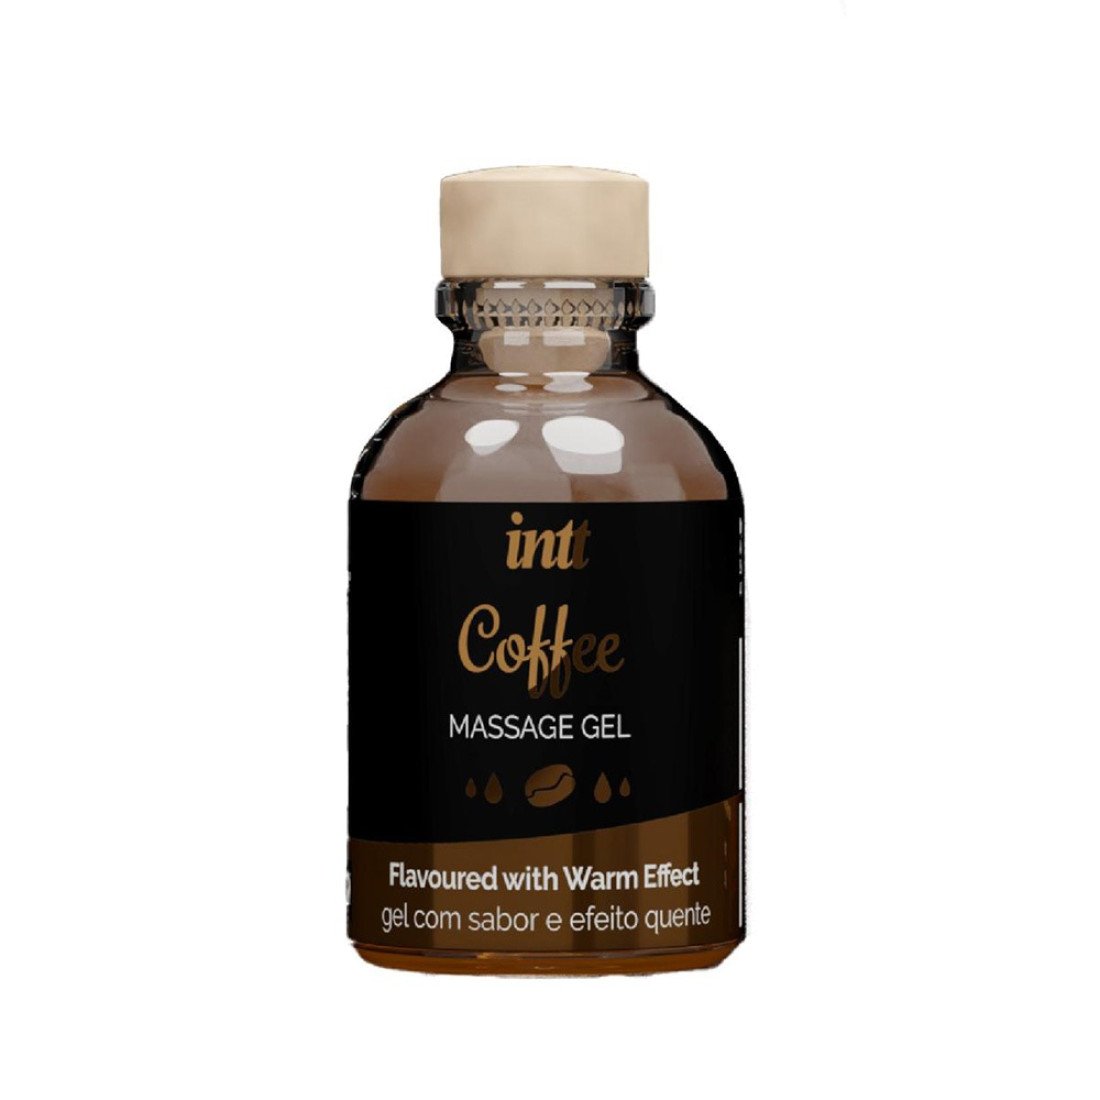 Šildantis masažo gelis „Coffee“, 30 ml - Intt